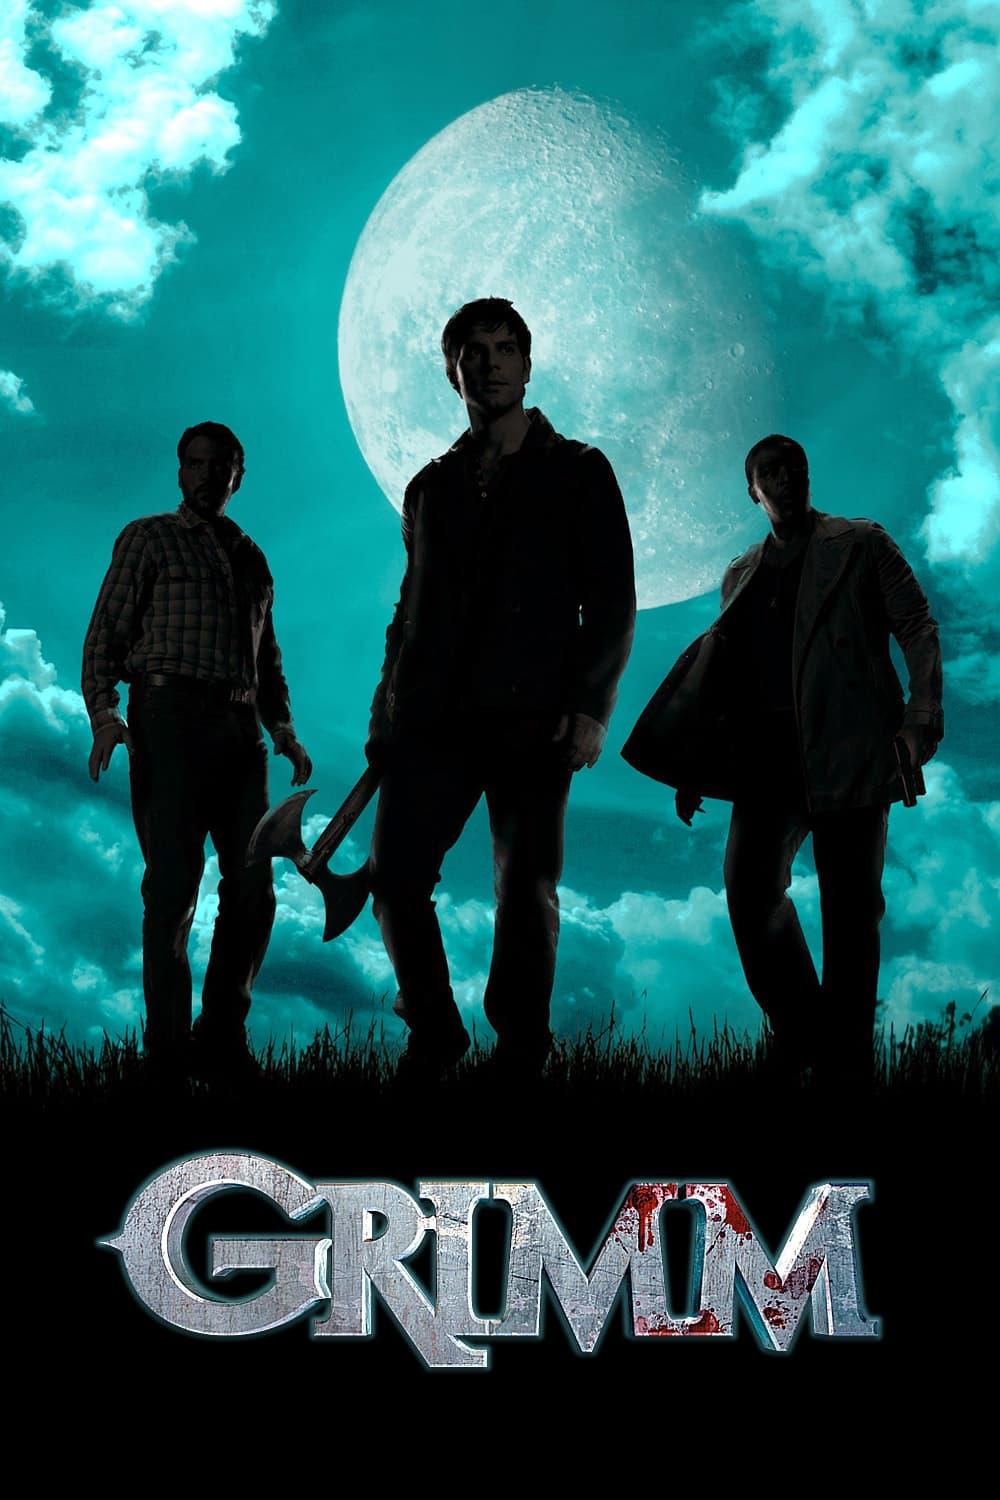 Grimm poster